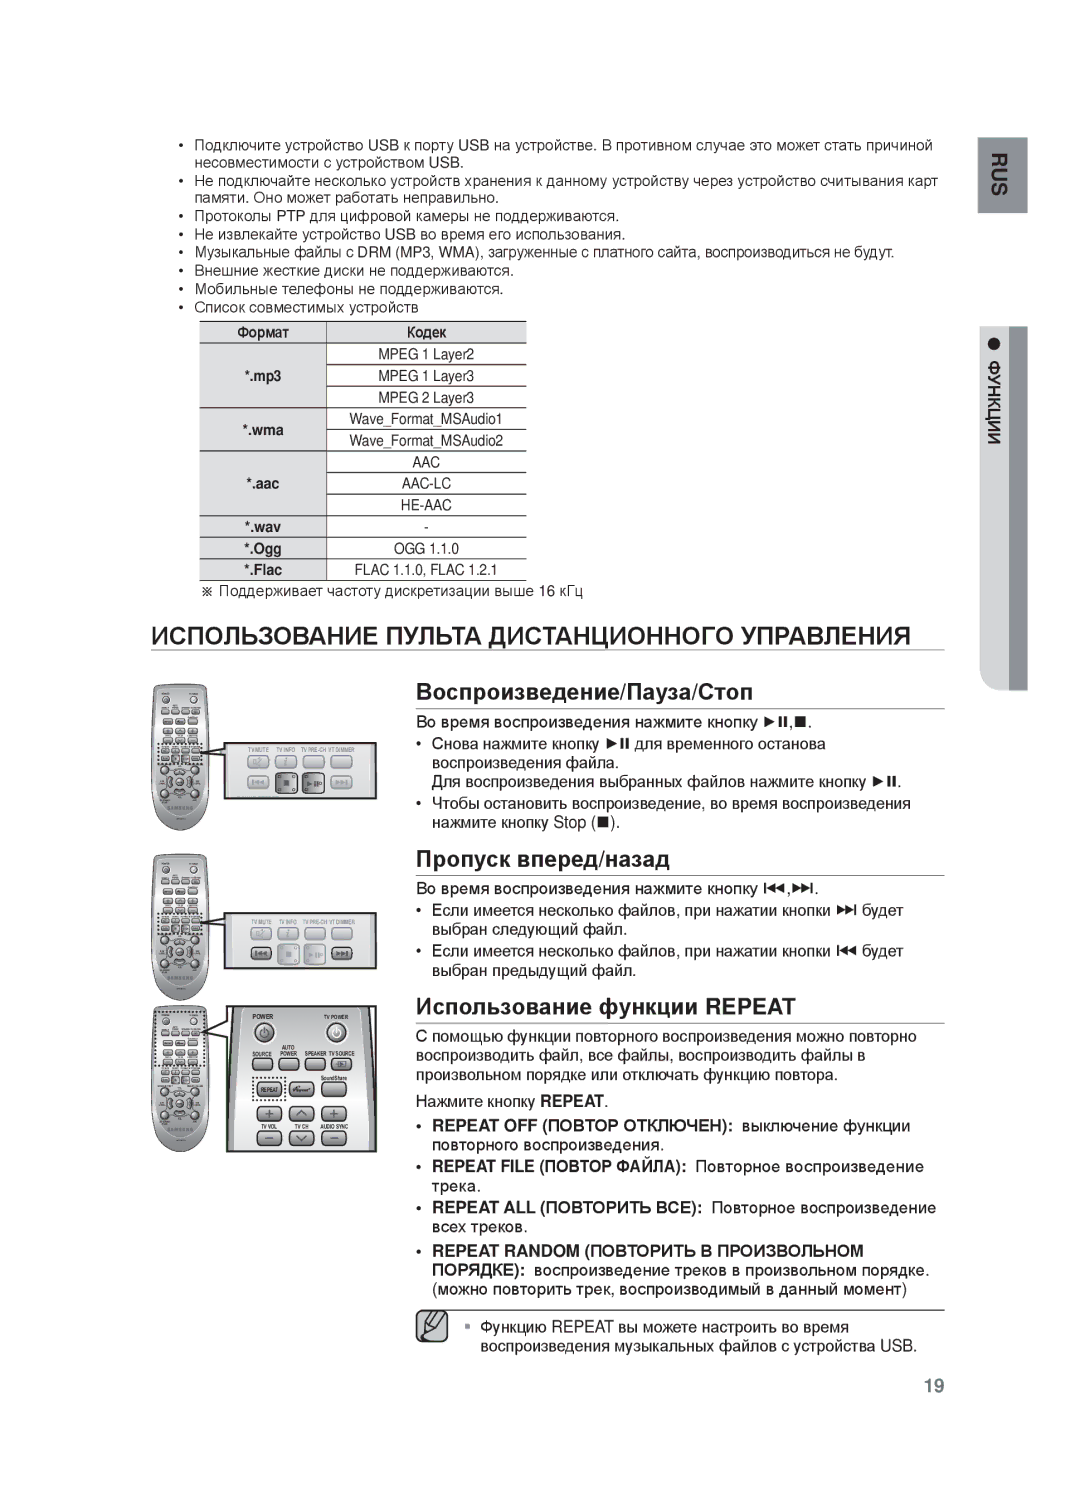 Samsung HW-F750/RU manual ИɋПɈЛЬЗɈȼȺɇИȿ Пульɍⱥ ДИɋɌȺɇЦИɈɇɇɈГɈ УПɊȺȼЛȿɇИЯ, Ȼɨɫпɪɨизвɟдɟниɟ/Пɚɭзɚ/ɋтɨп, Пɪɨпɭɫк впɟɪɟд/нɚзɚд 